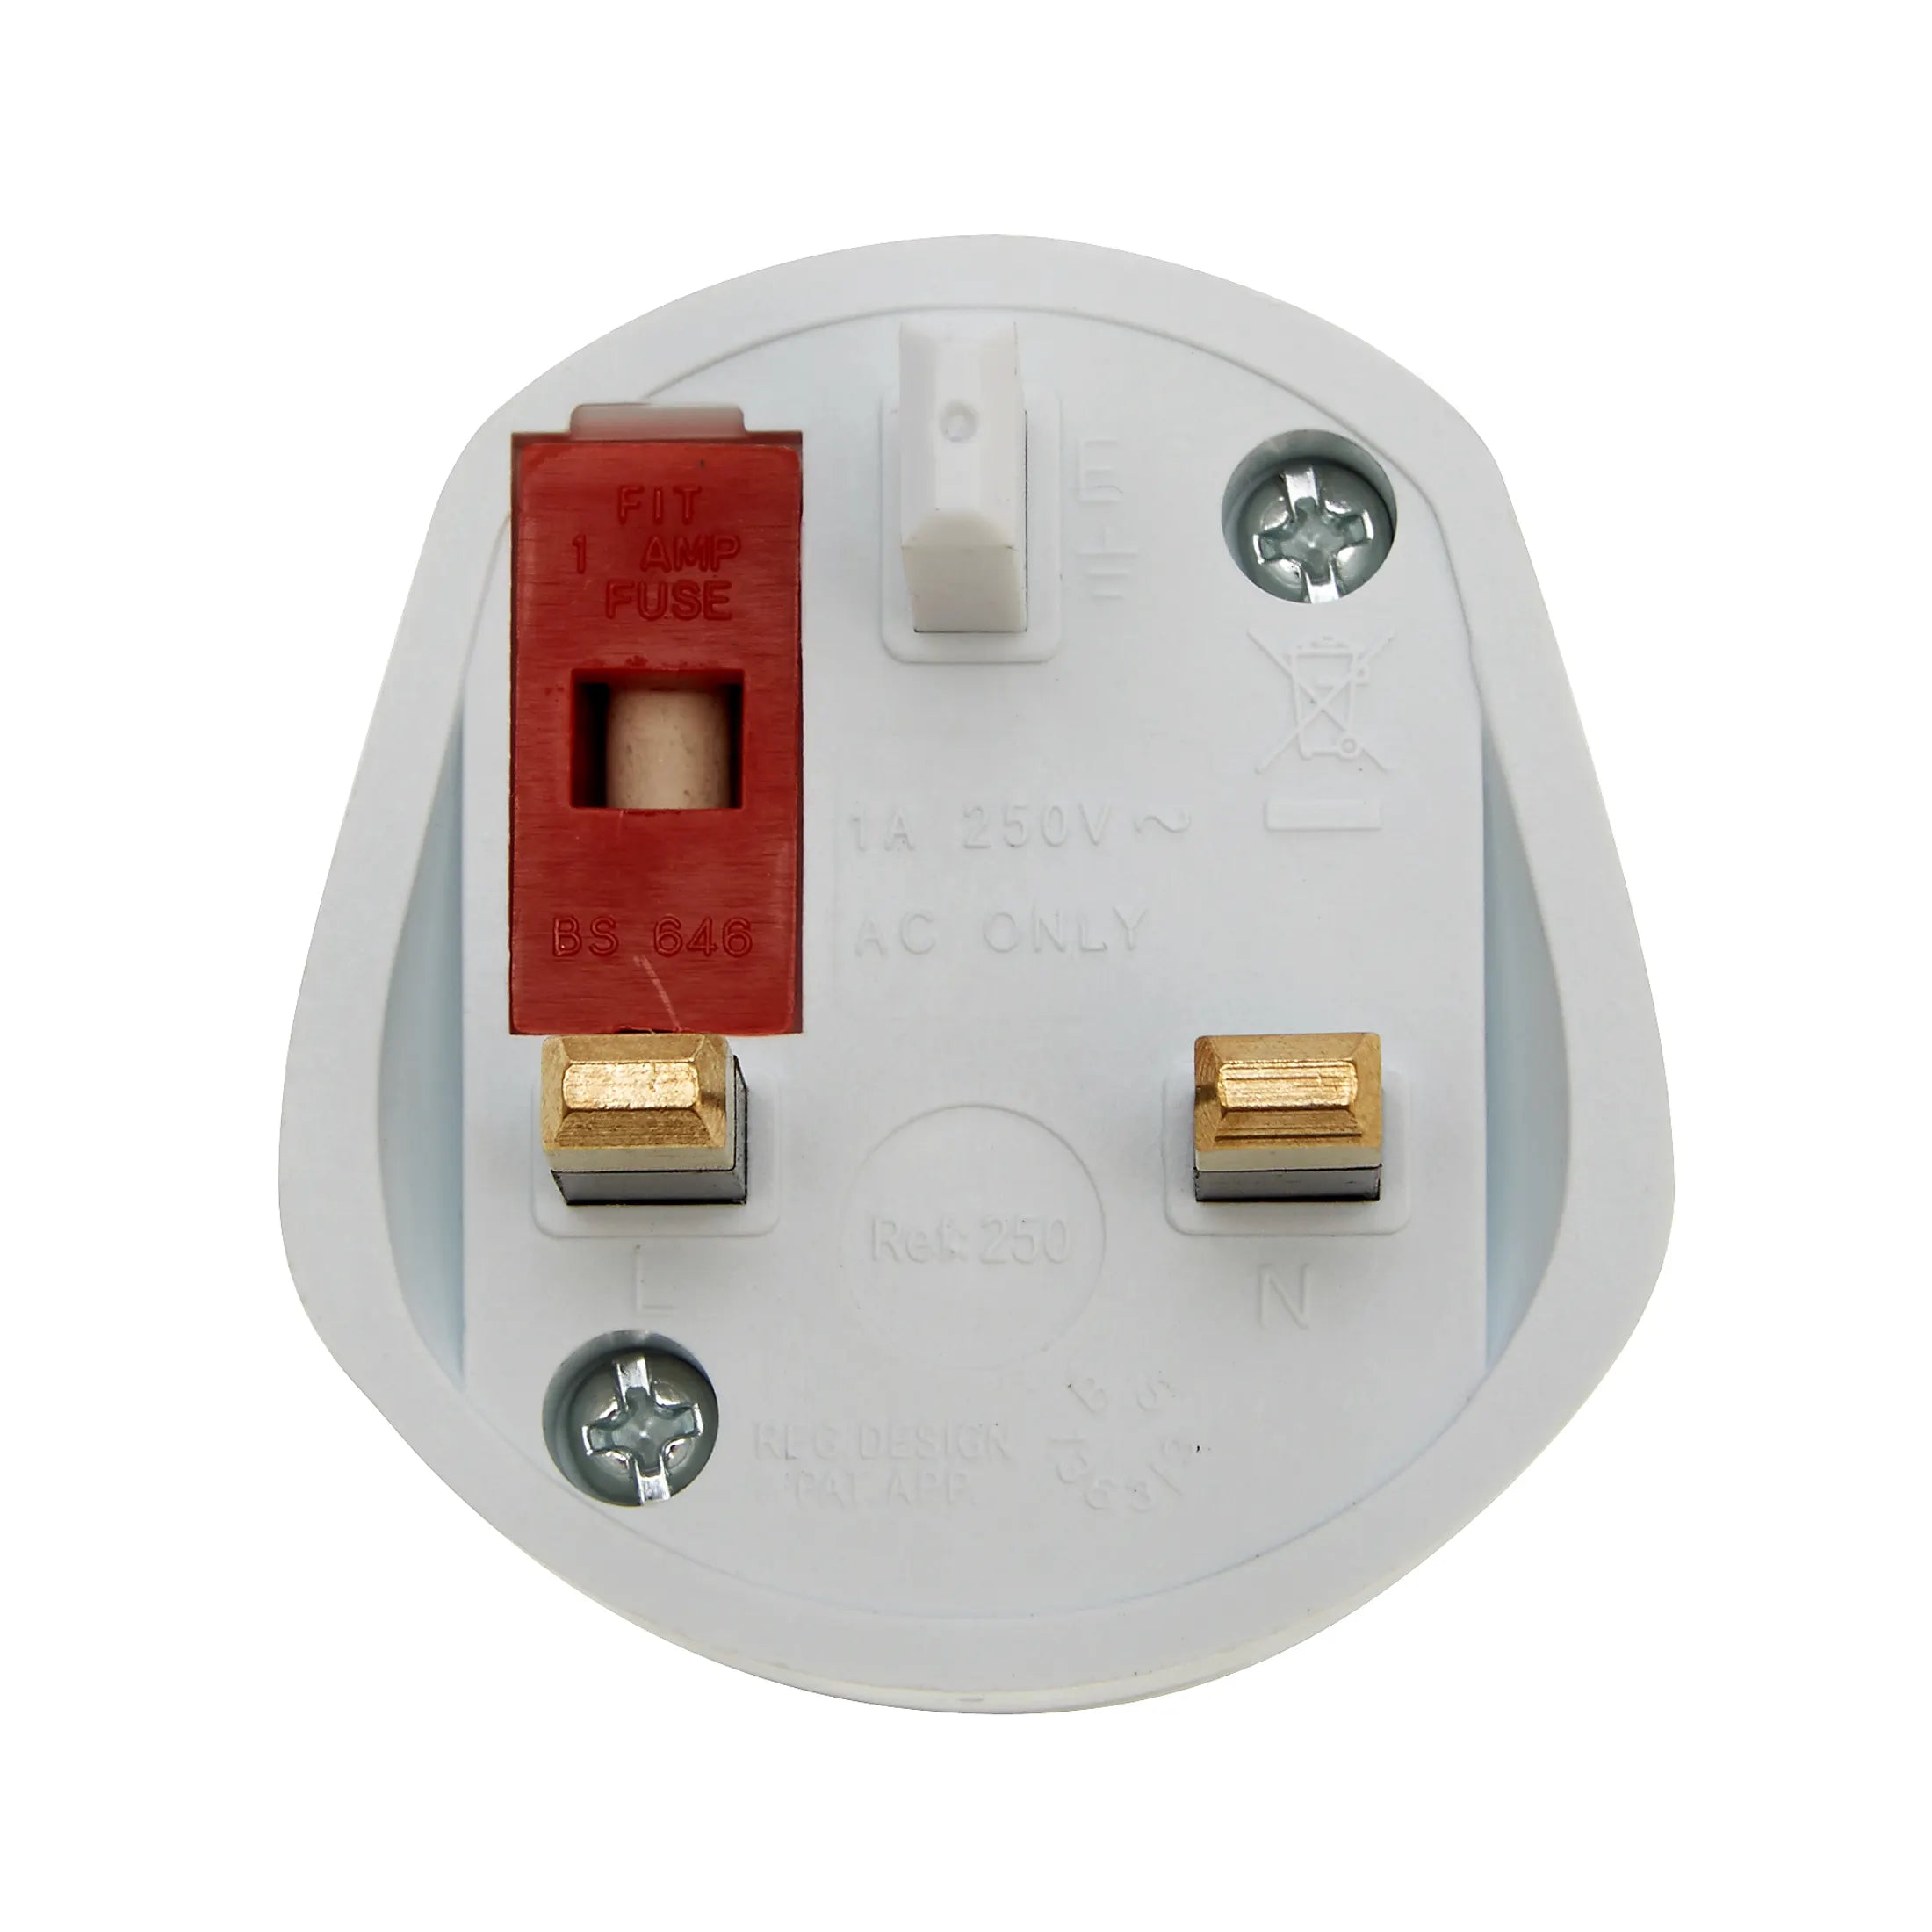 Design Go travel accessories adapter for shaver UK - white